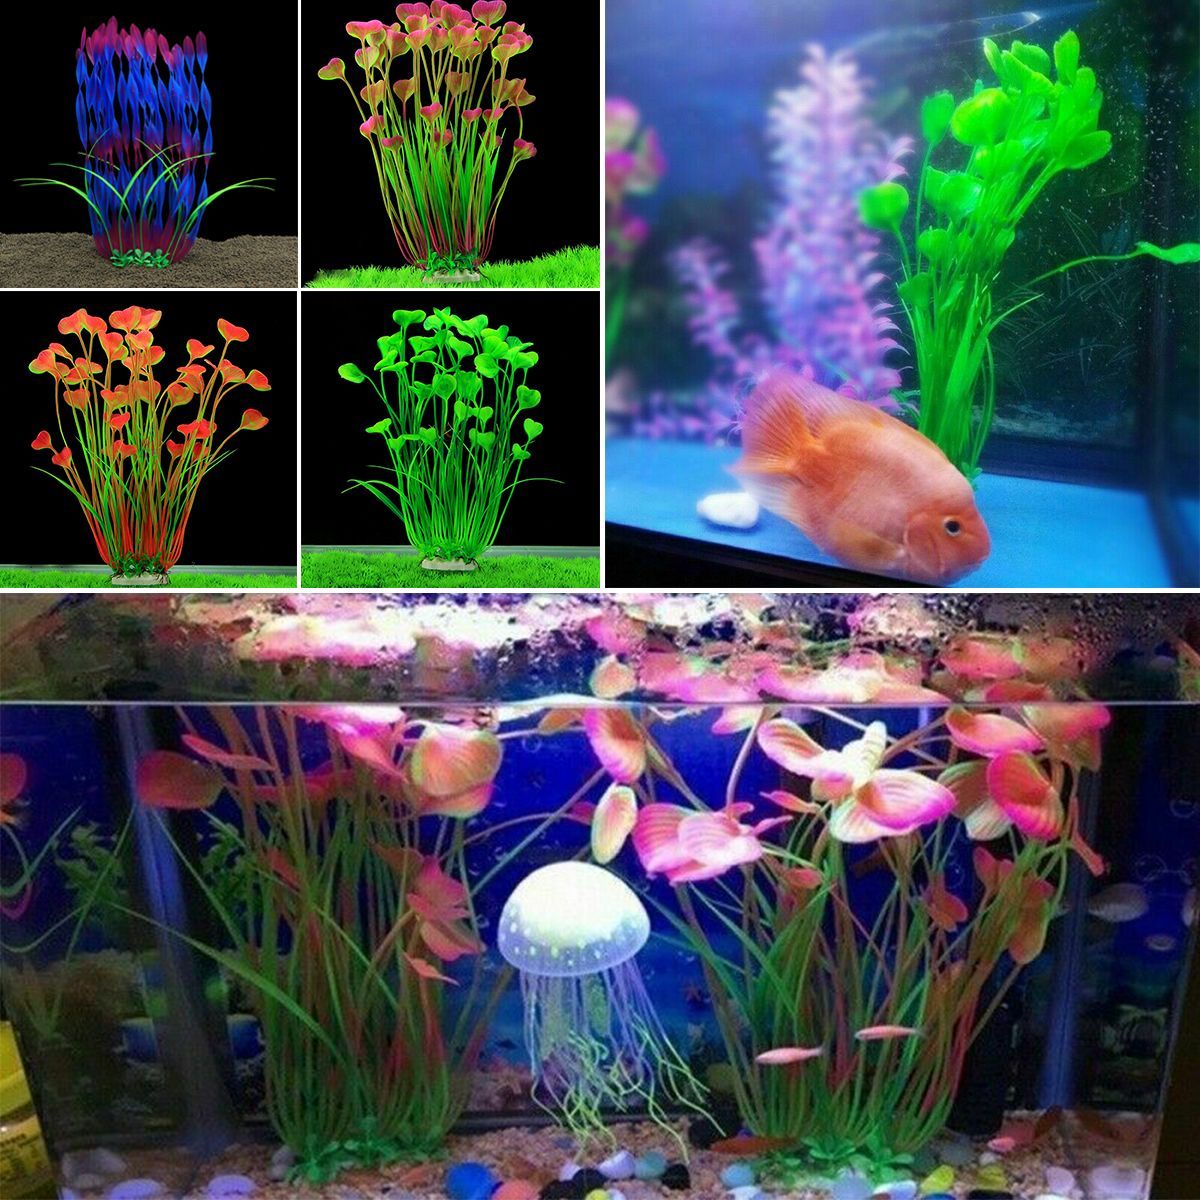 Artificial-Aquarium-Plants-Decoration-Fish-Tank-Water-Grass-Plant-Ornament-1724230